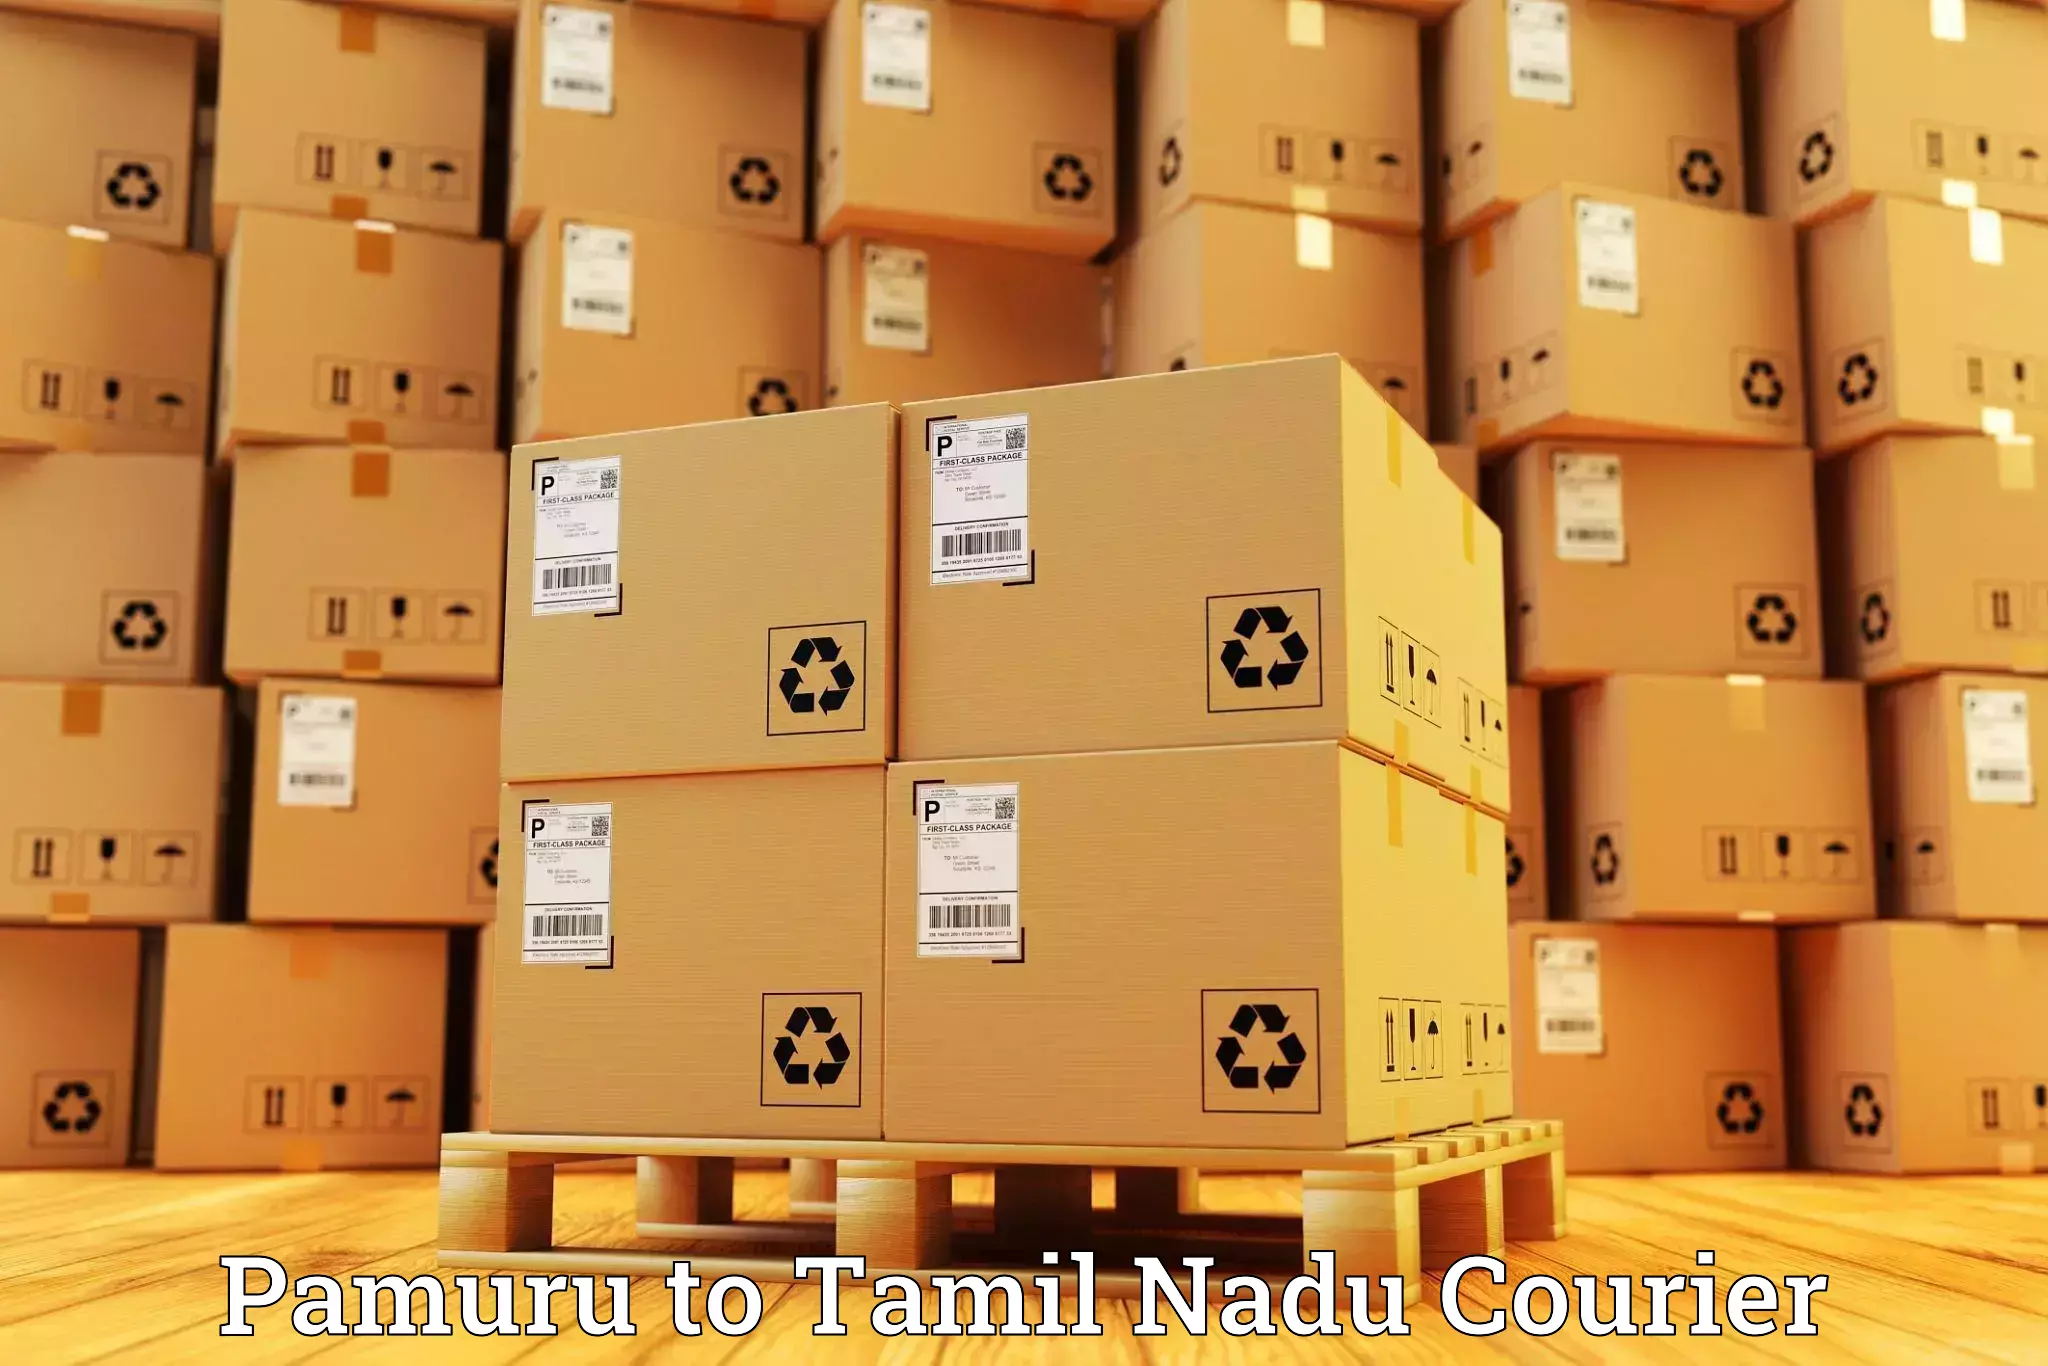 Courier service innovation Pamuru to Mylapore